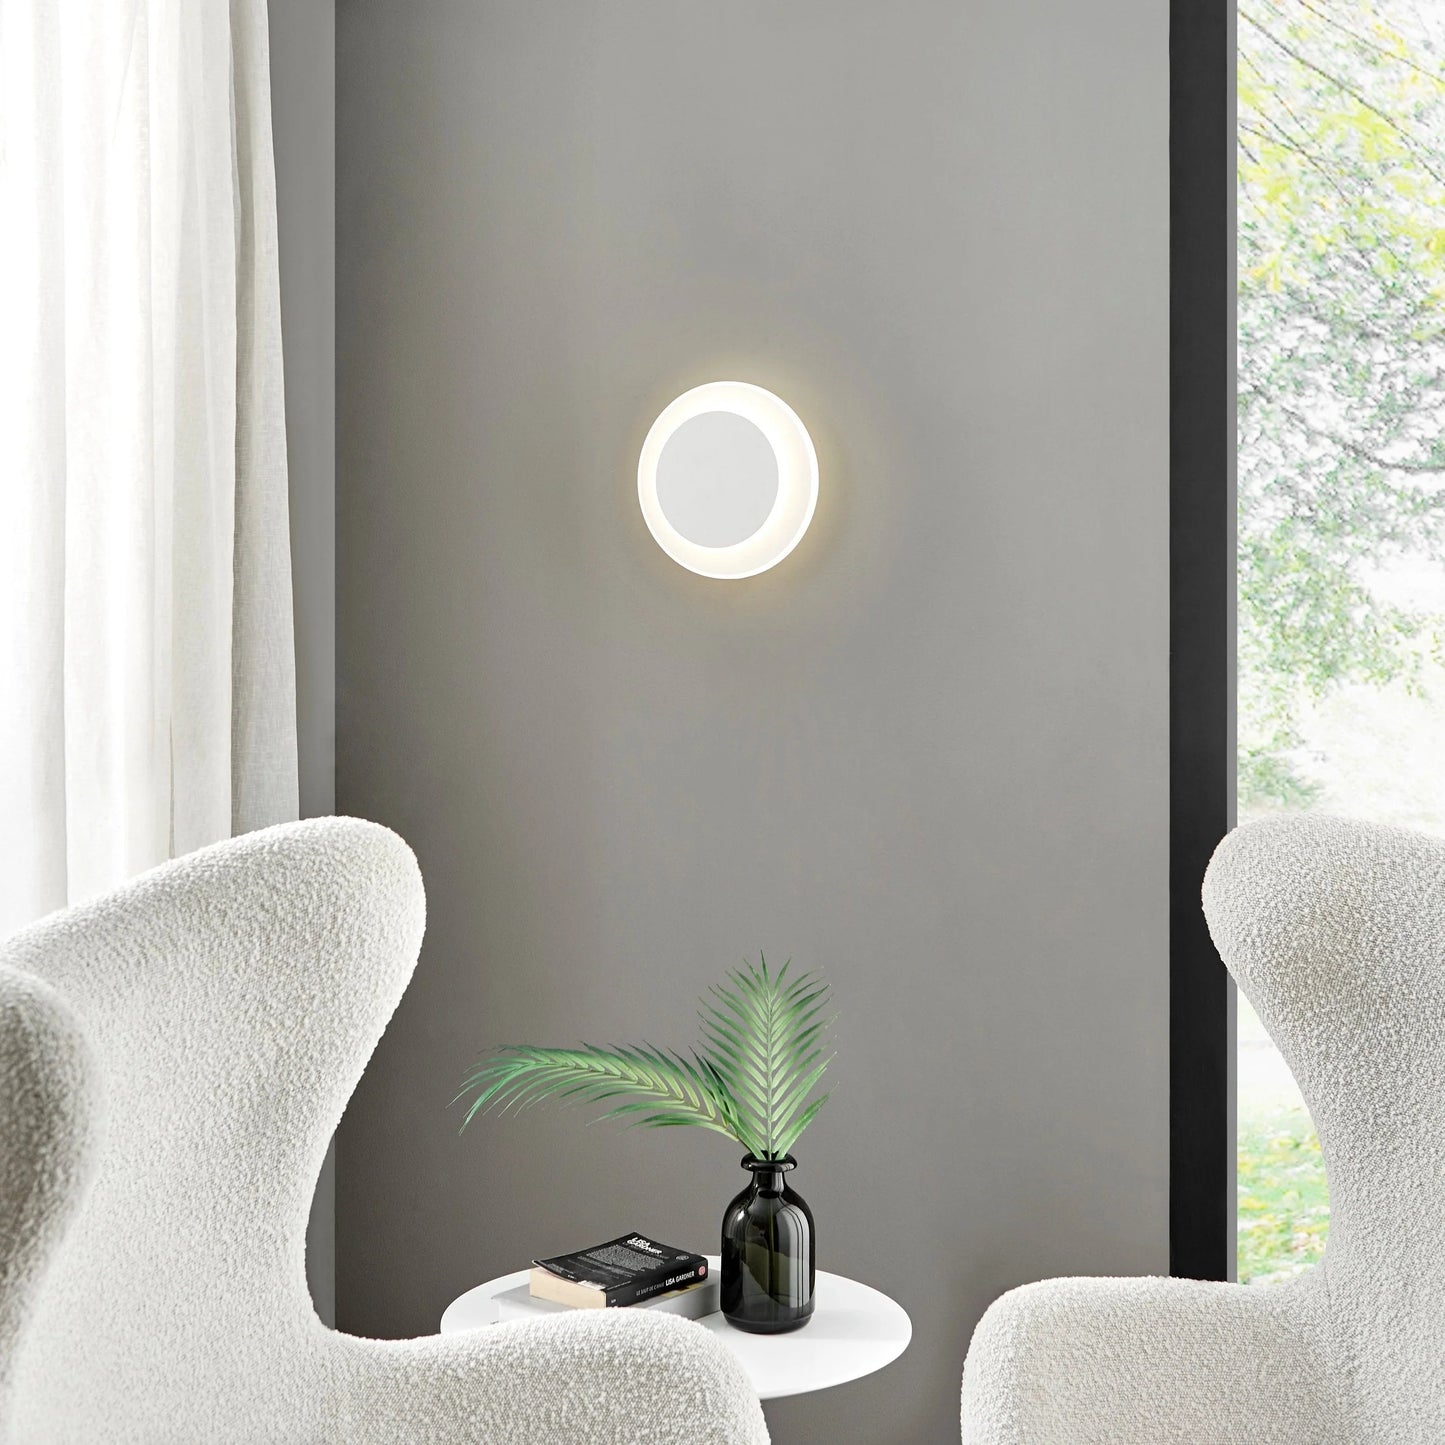  Luna Eclipse Two Circle Wall/Ceiling Light Matte White - Smart Light 2